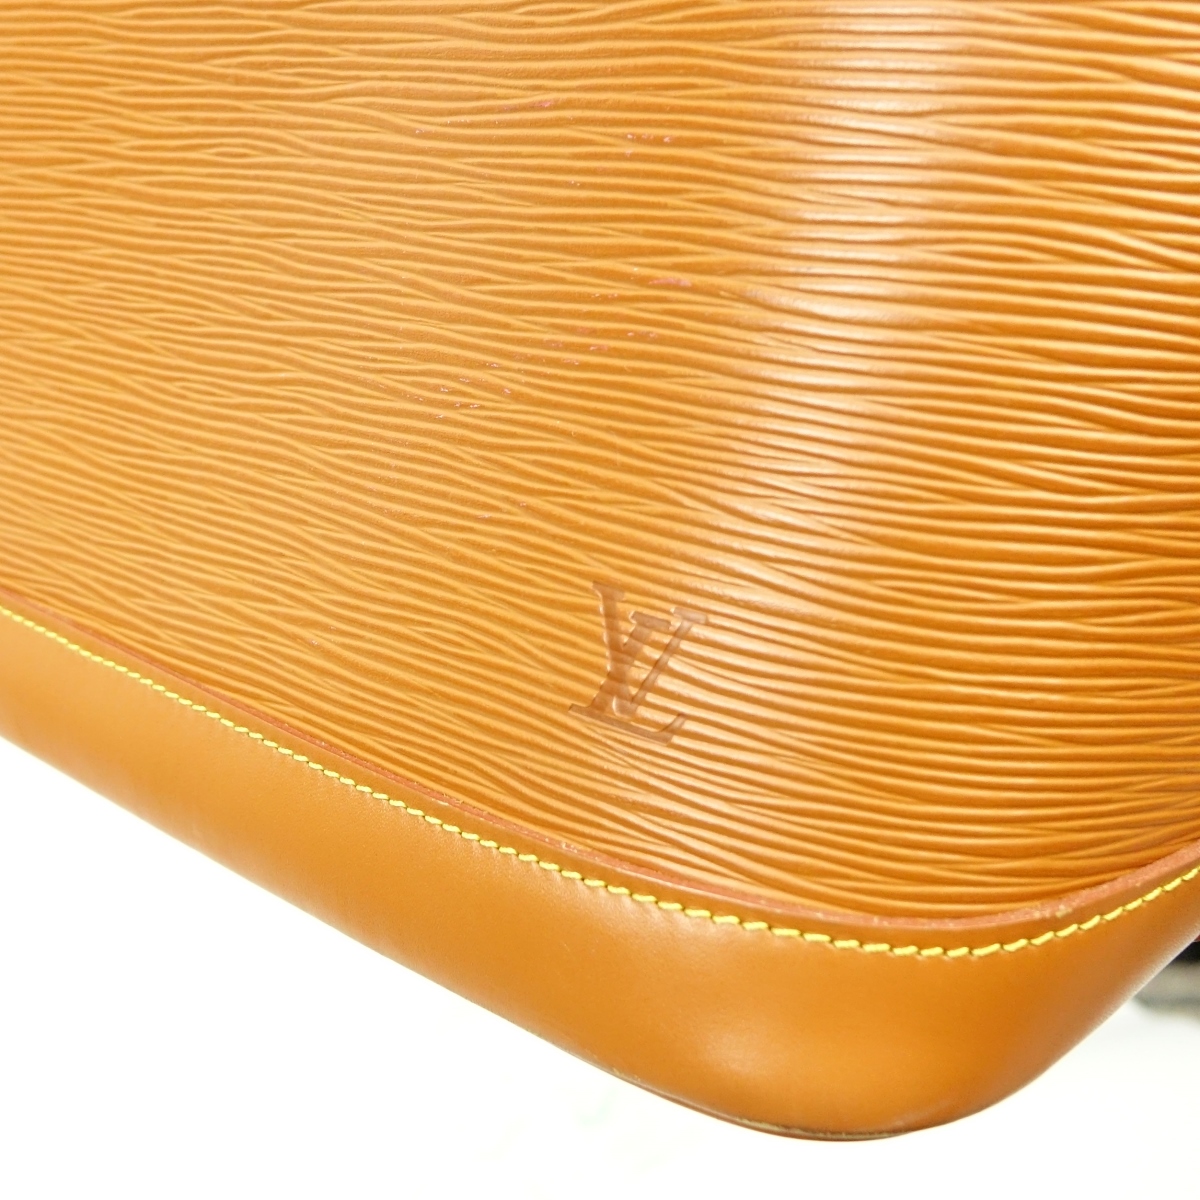 Louis Vuitton Gold Epi Leather Alma PM Bag